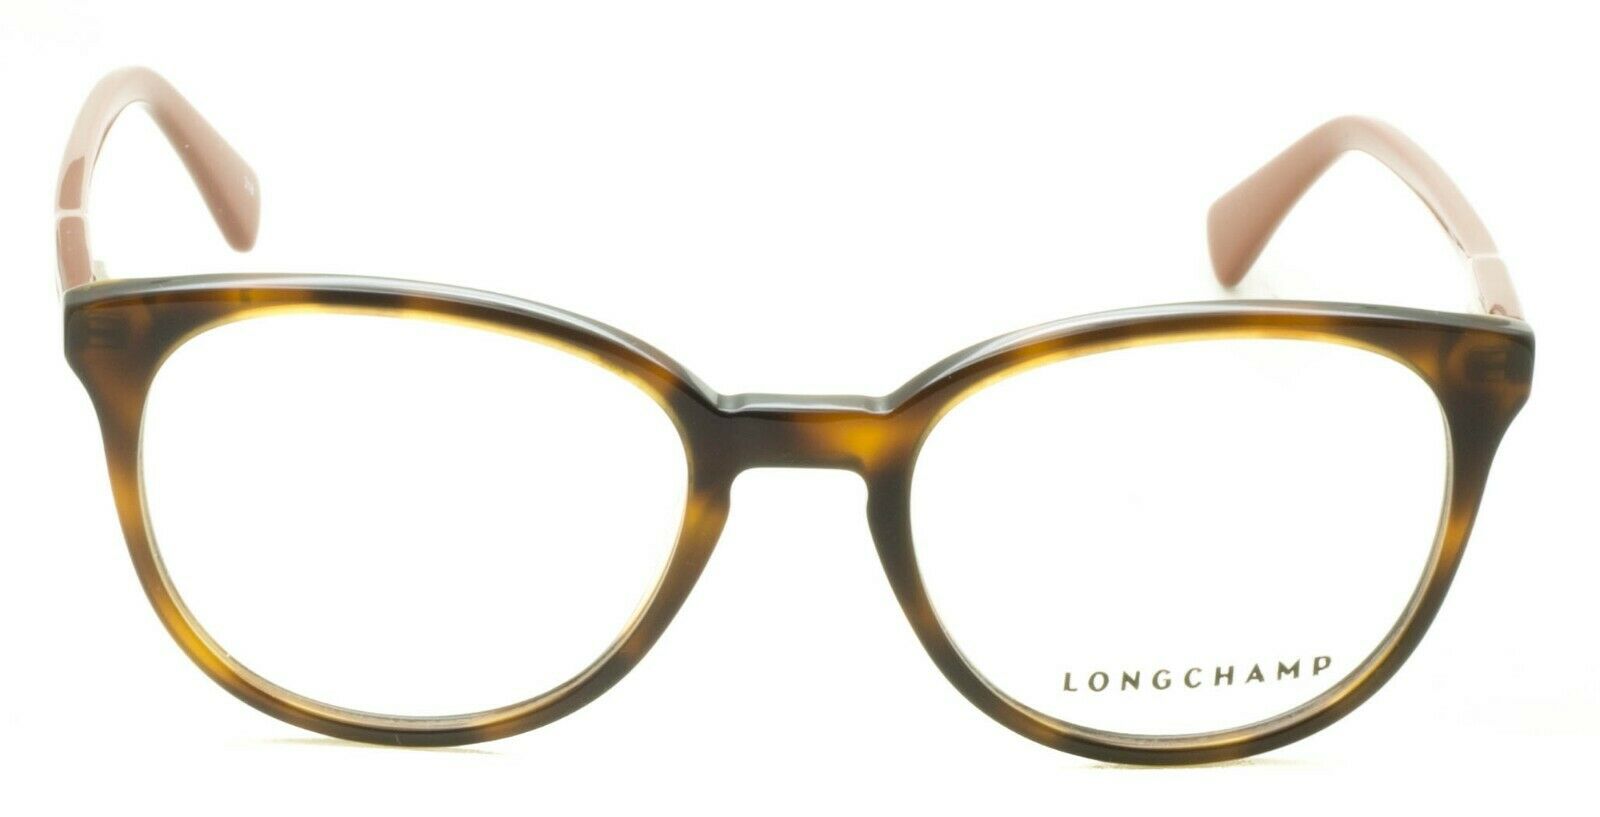 LONGCHAMP LO2608 214 51mm Eyewear FRAMES Glasses RX Optical Eyeglasses - New